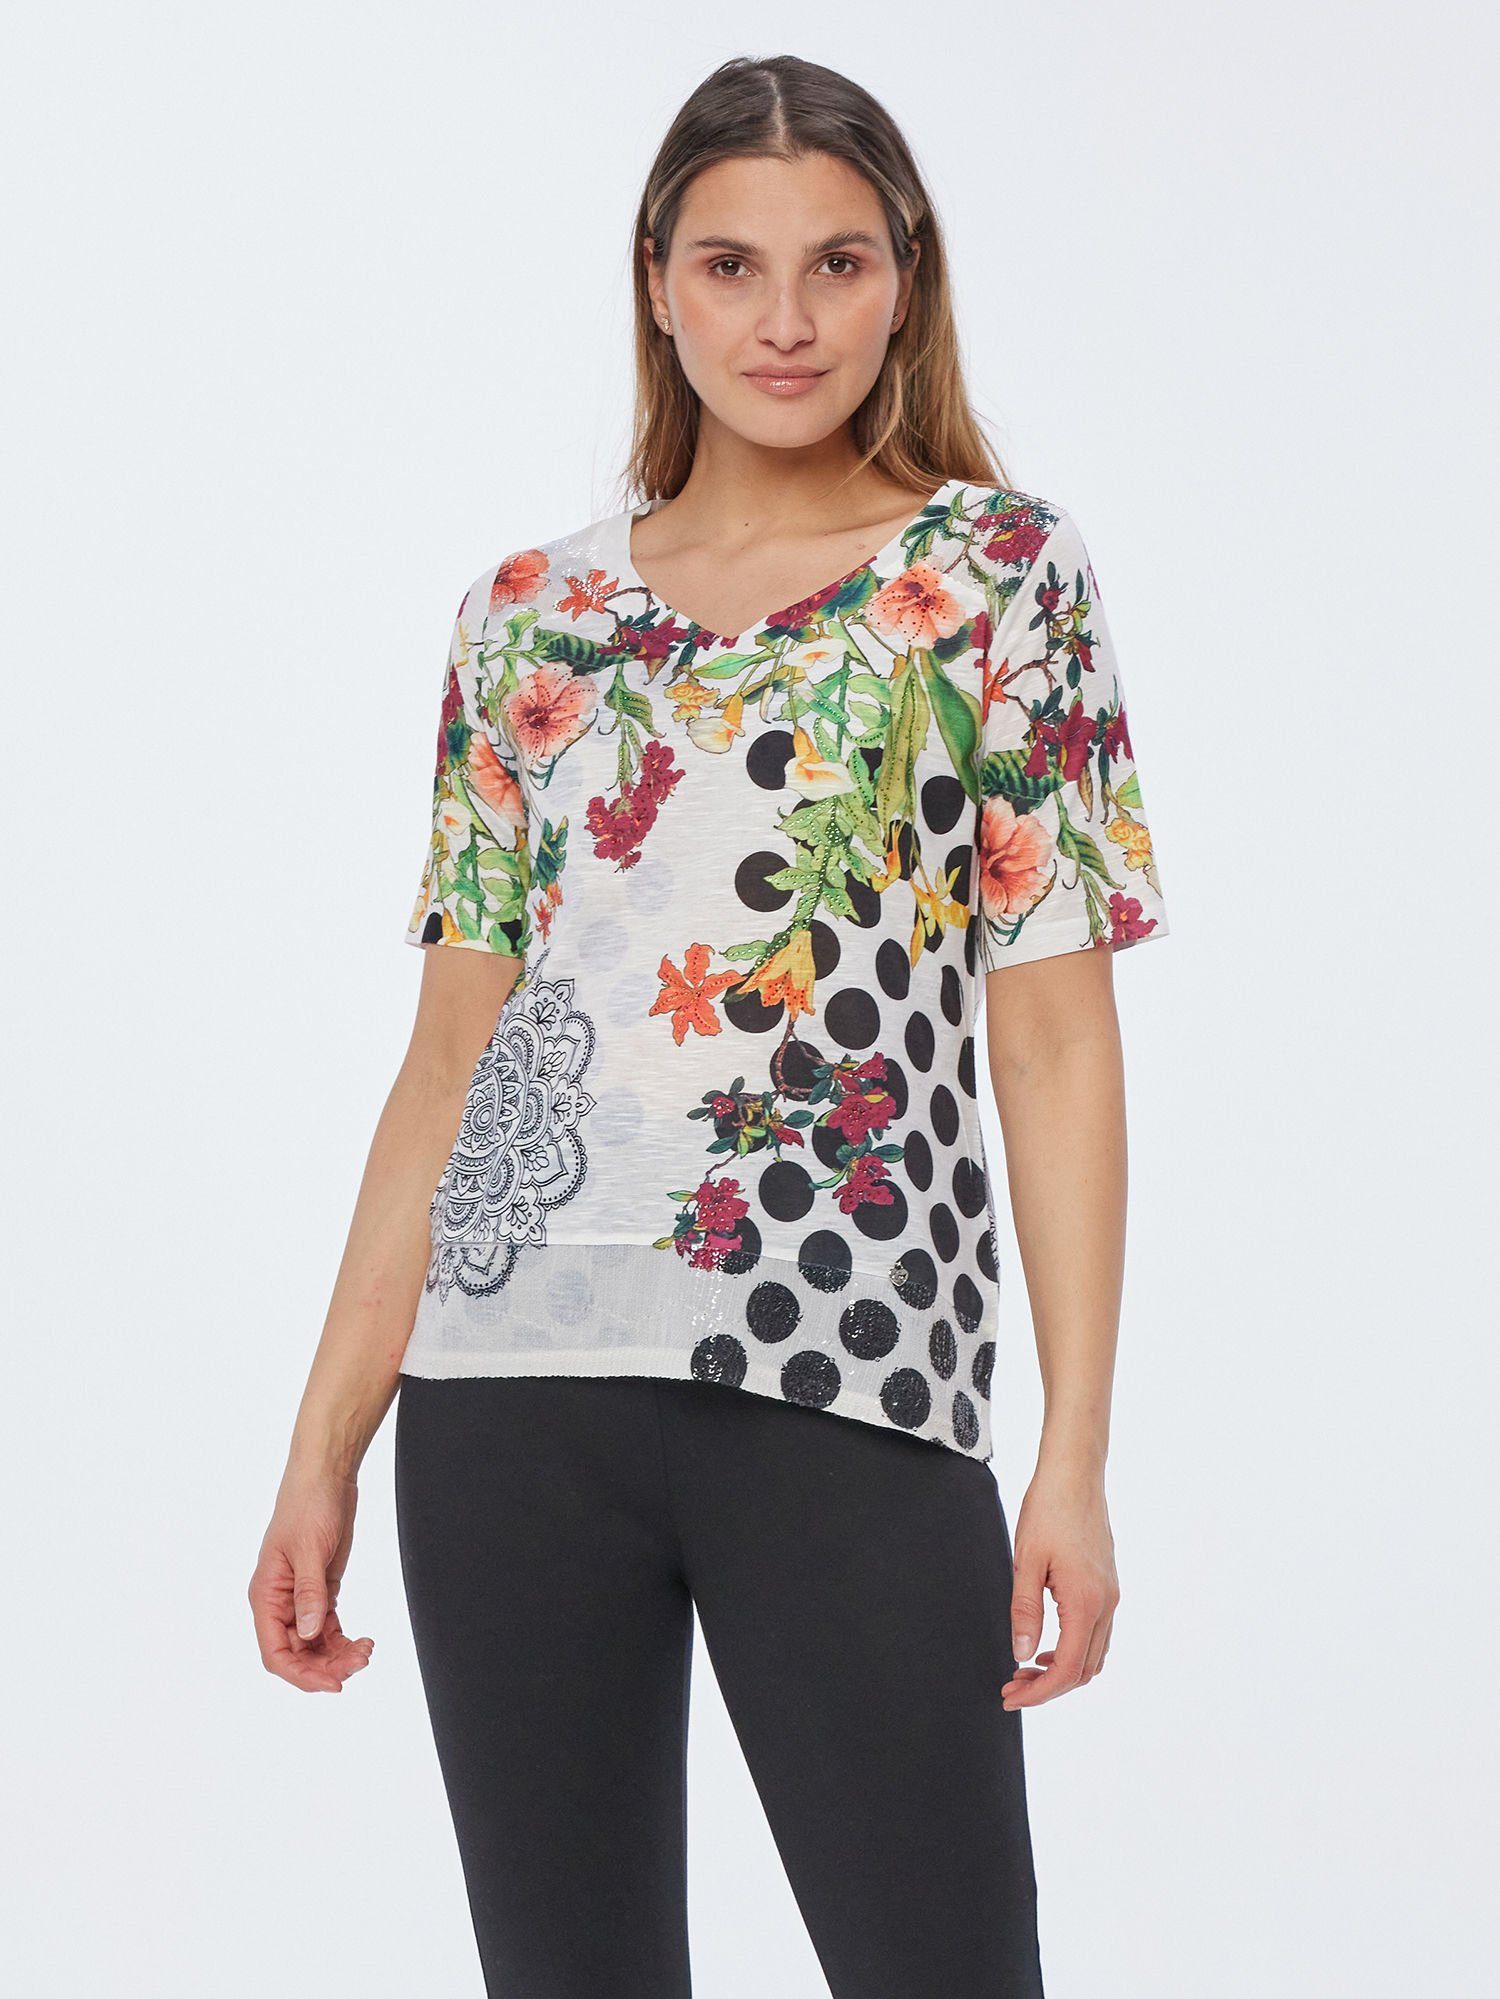 Christian Materne T-Shirt Druckbluse koerpernah mit floralem Print